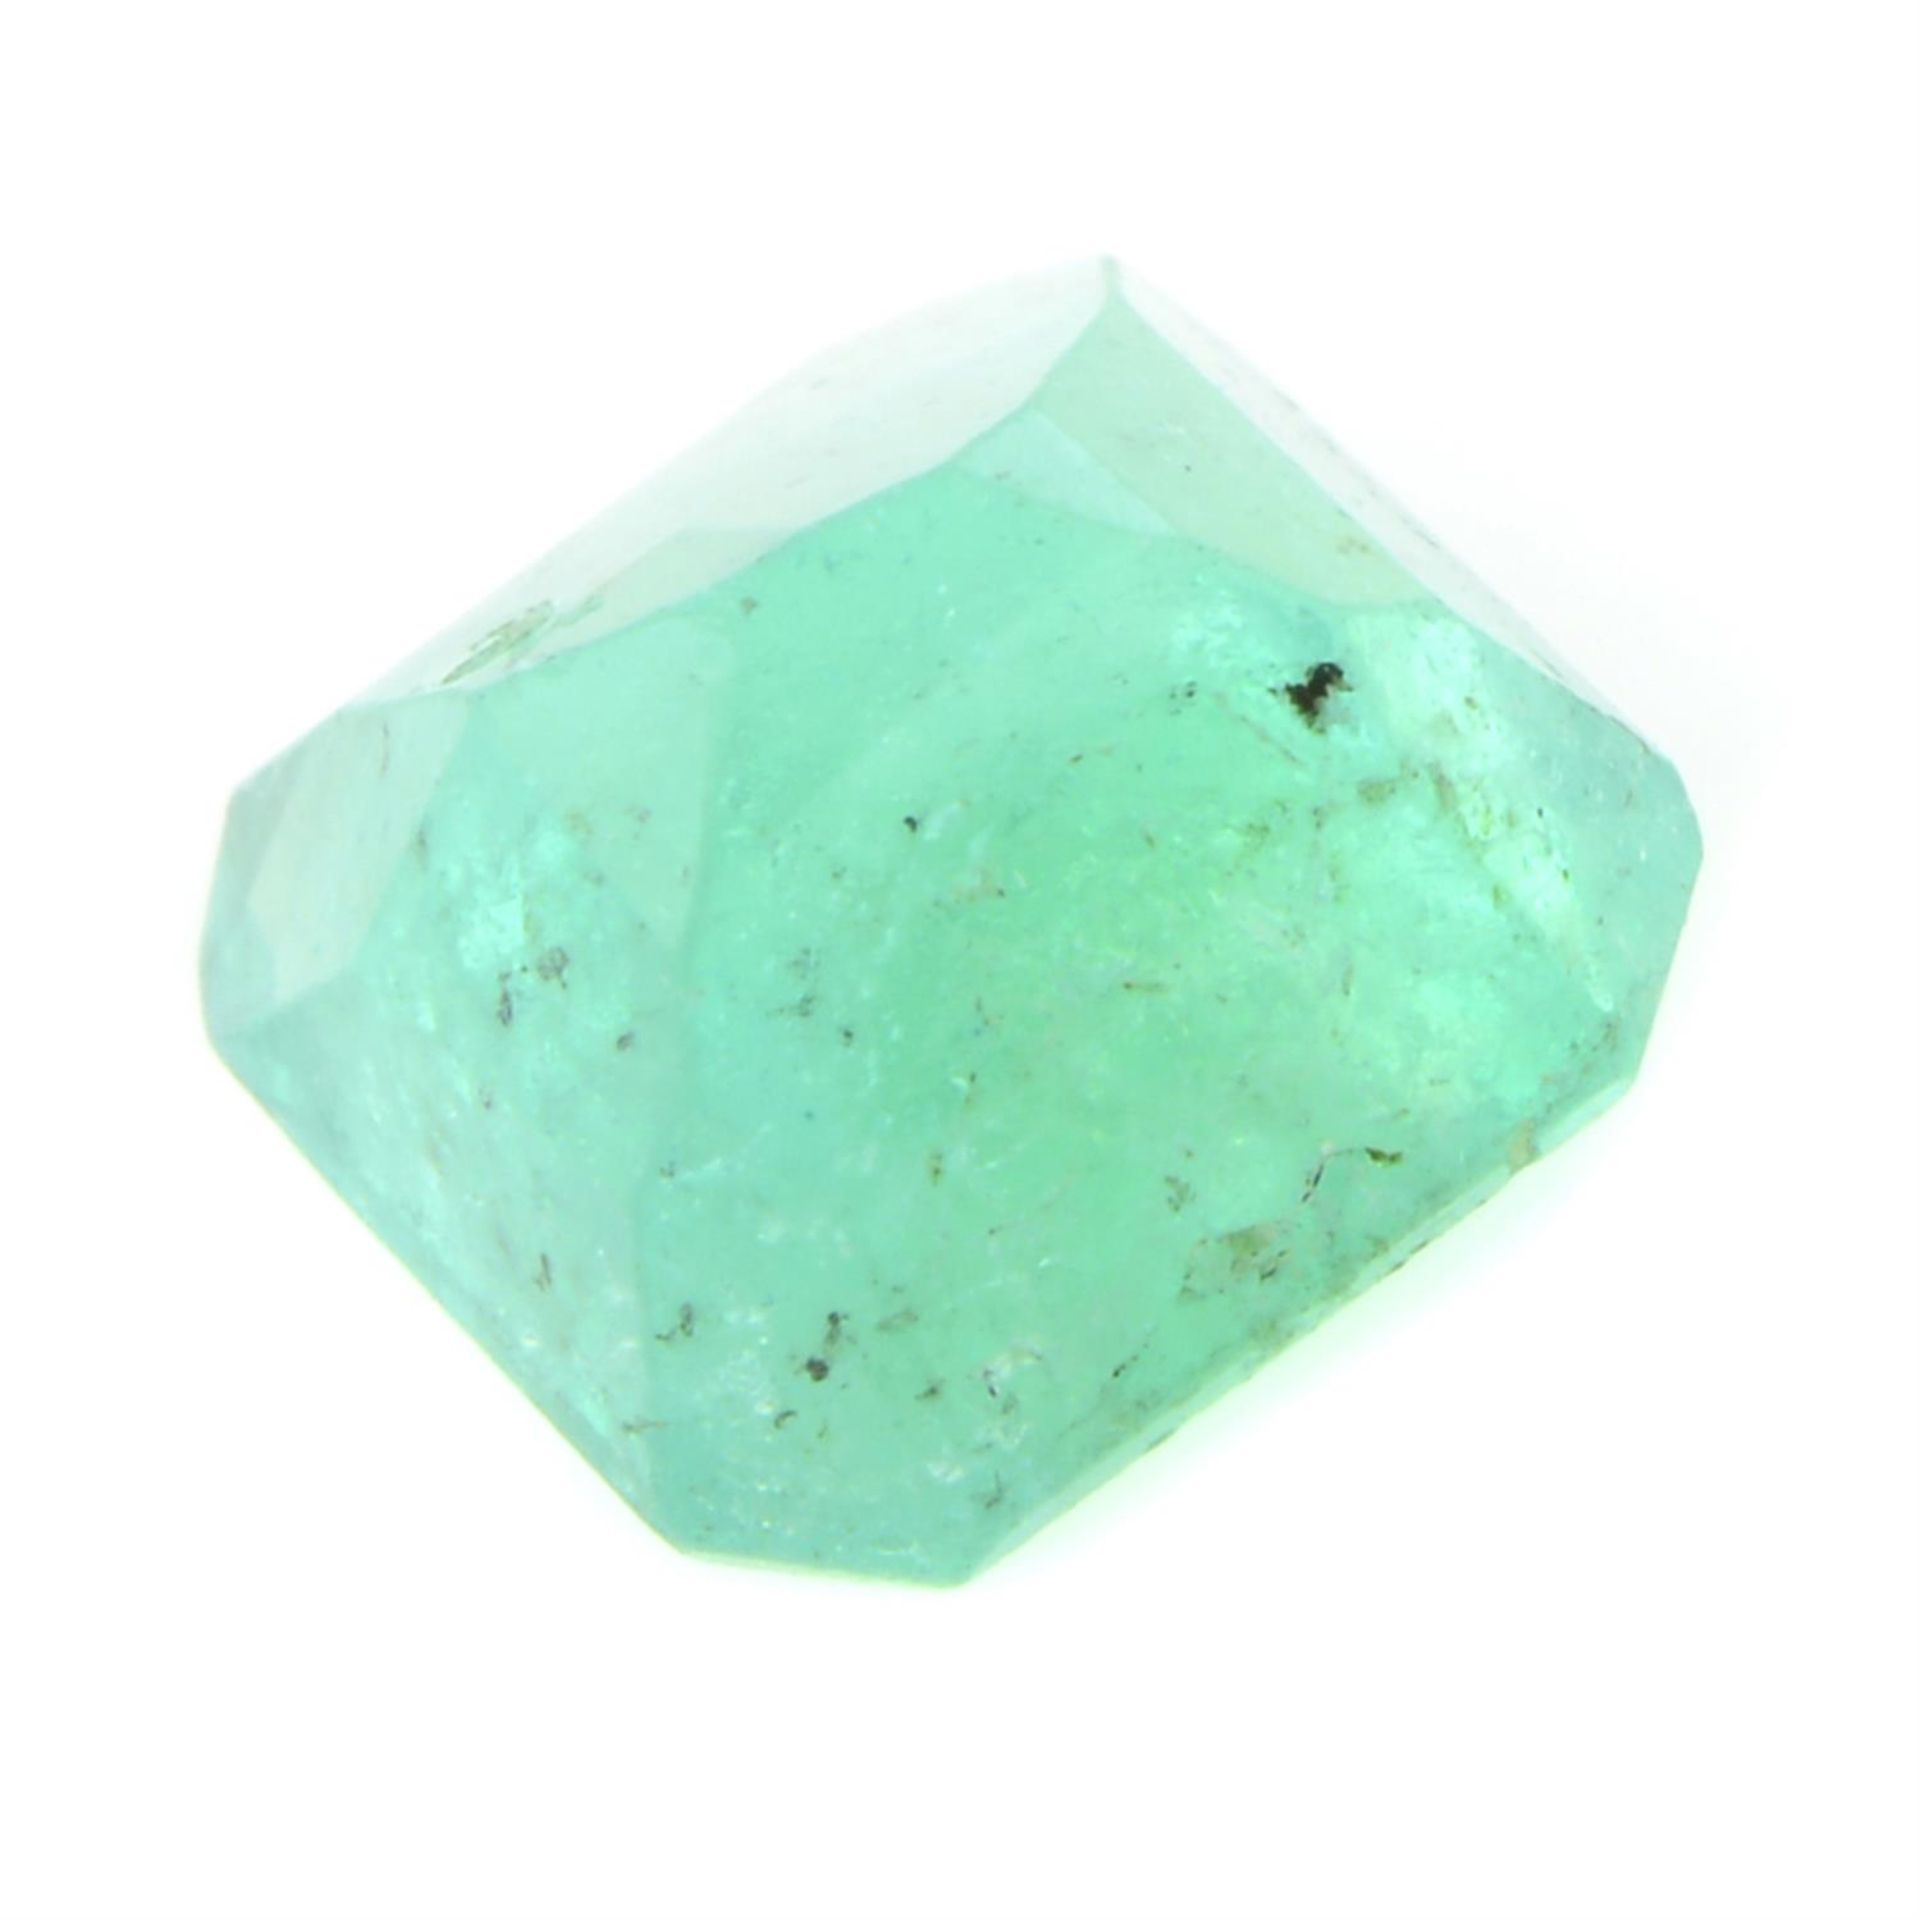 Rectangular-shape emerald, 0.83ct - Image 2 of 3